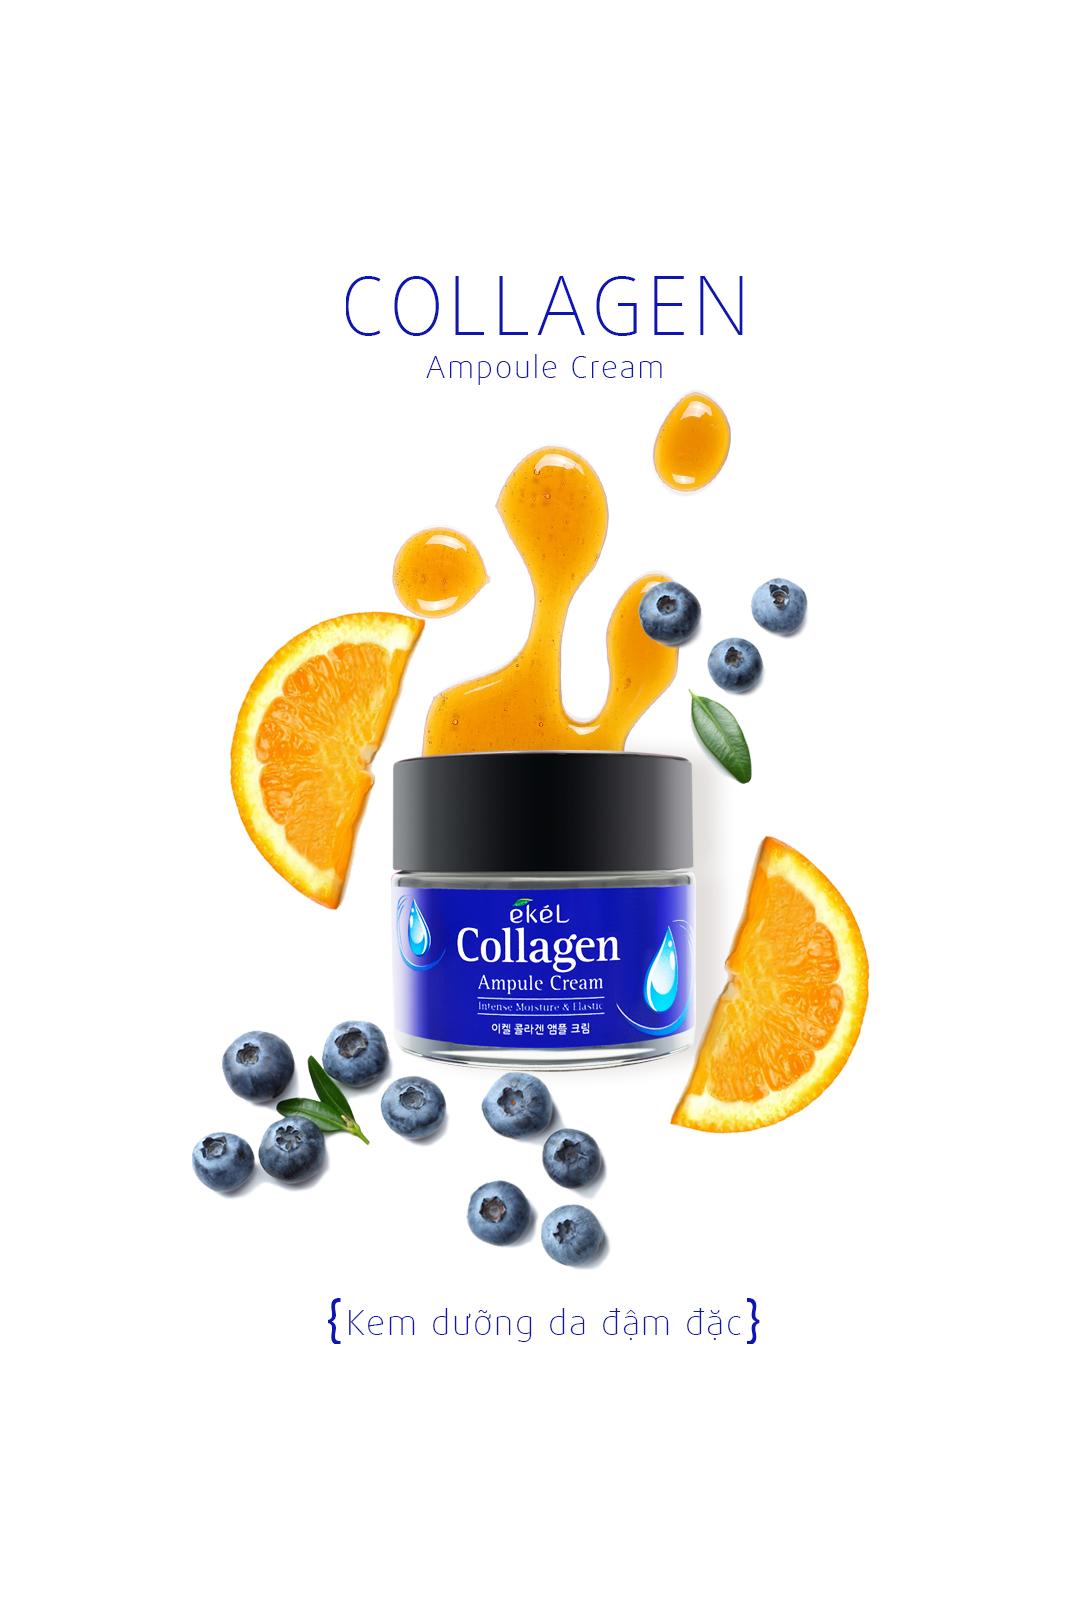 Kem dưỡng da Collagen Ekel